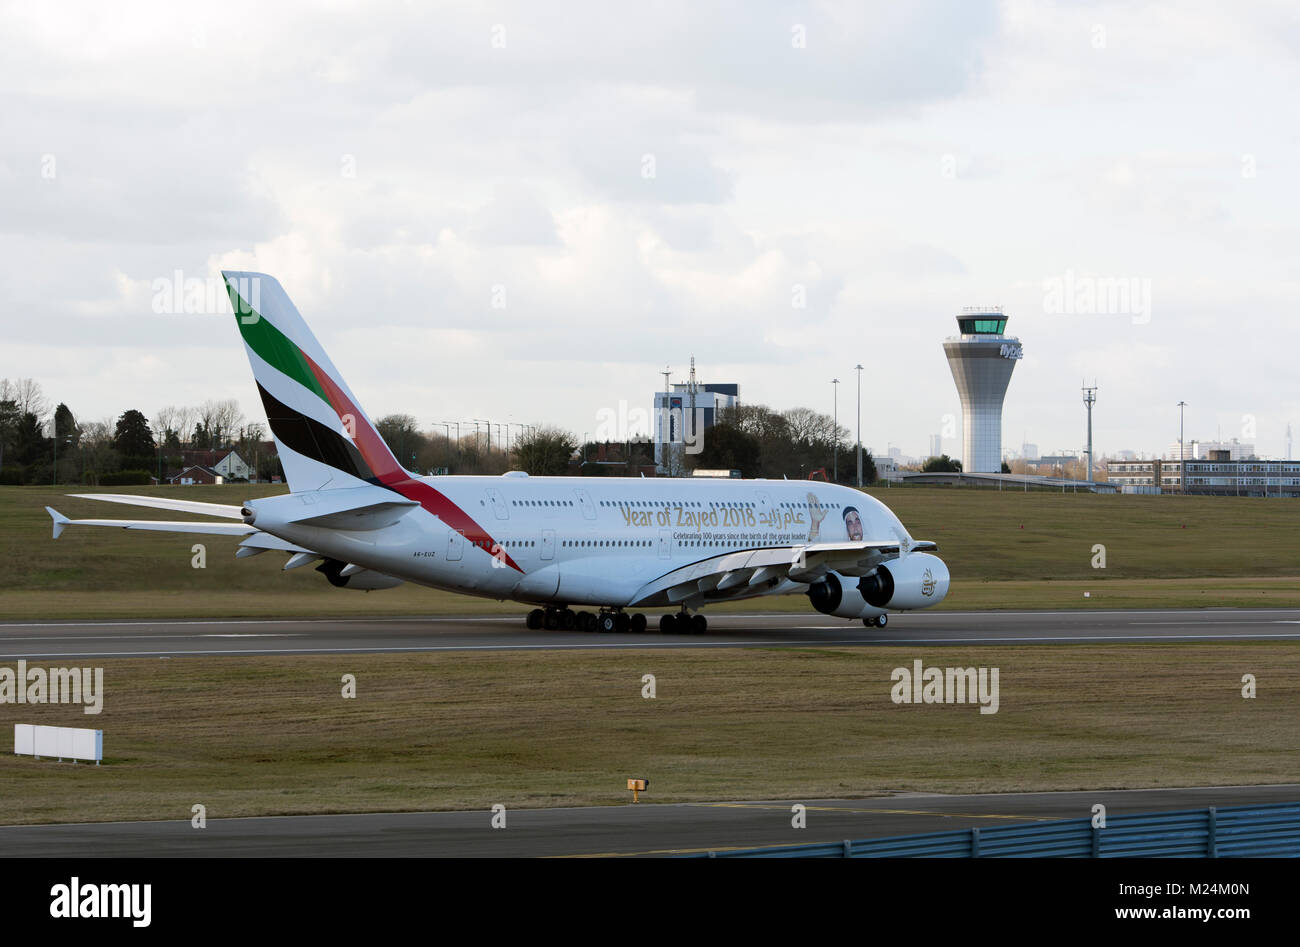 Emirates Airlines Airbus A380 taking off at Birmingham Airport, UK (A6-EUZ) Stock Photo